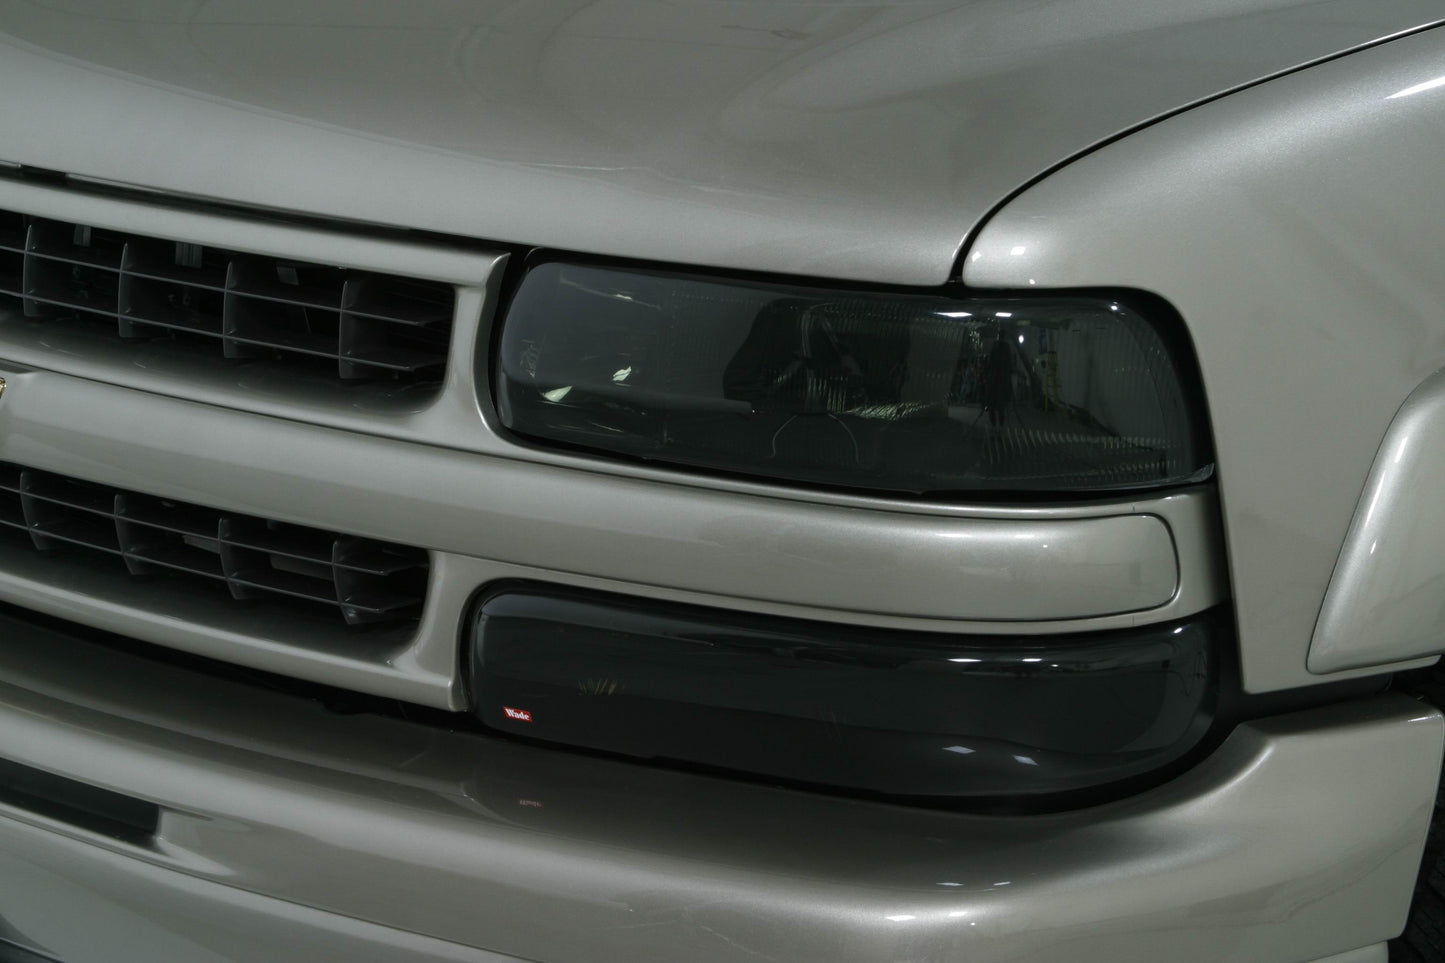 1993 Volkswagen Cabrio Head Light Covers